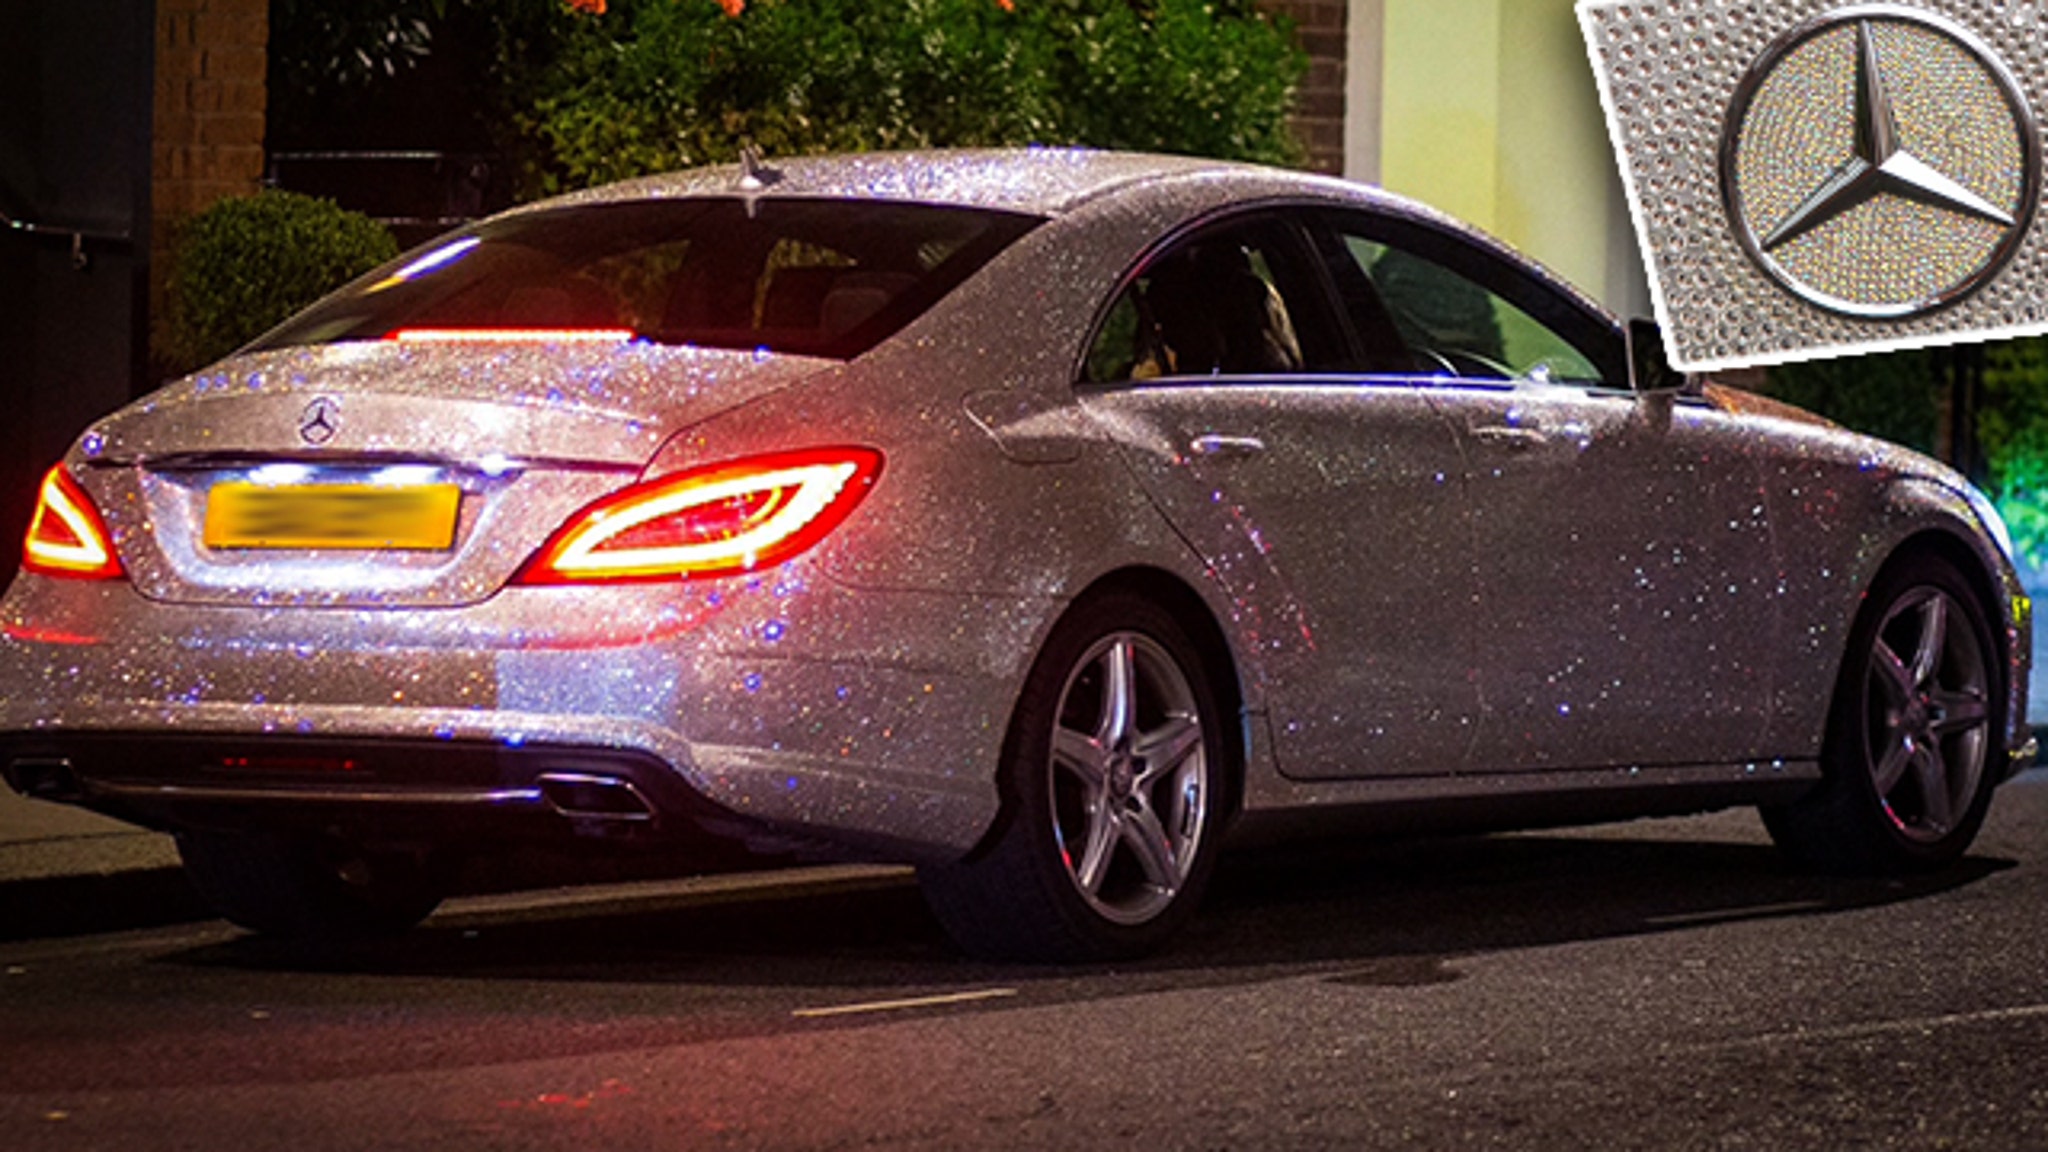 Swarovski Crystal Covered Mercedes – Tacky?